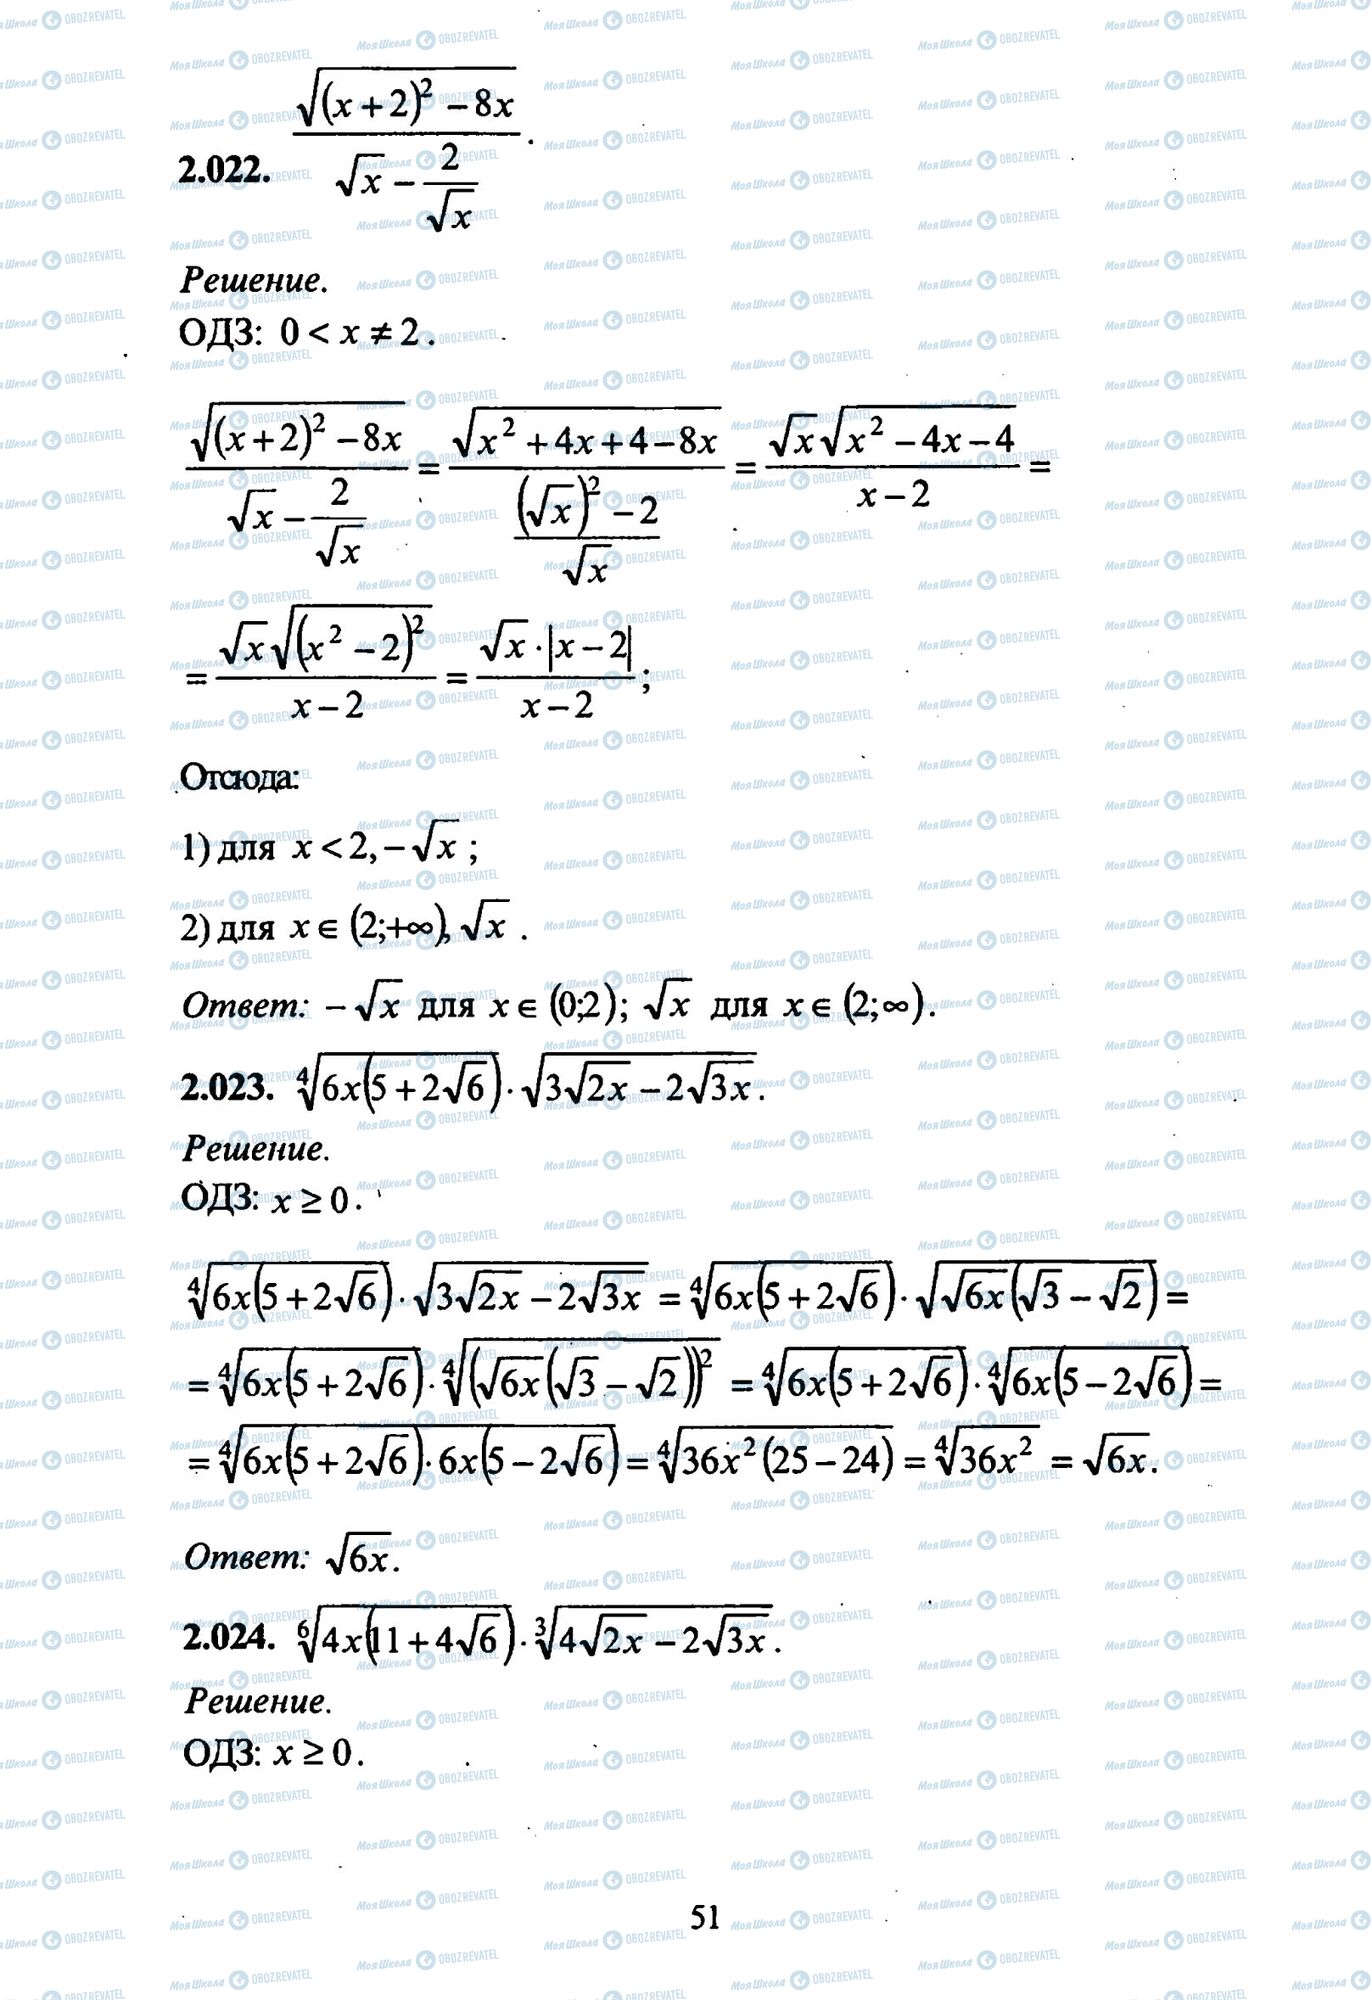 ЗНО Математика 11 класс страница 22-23